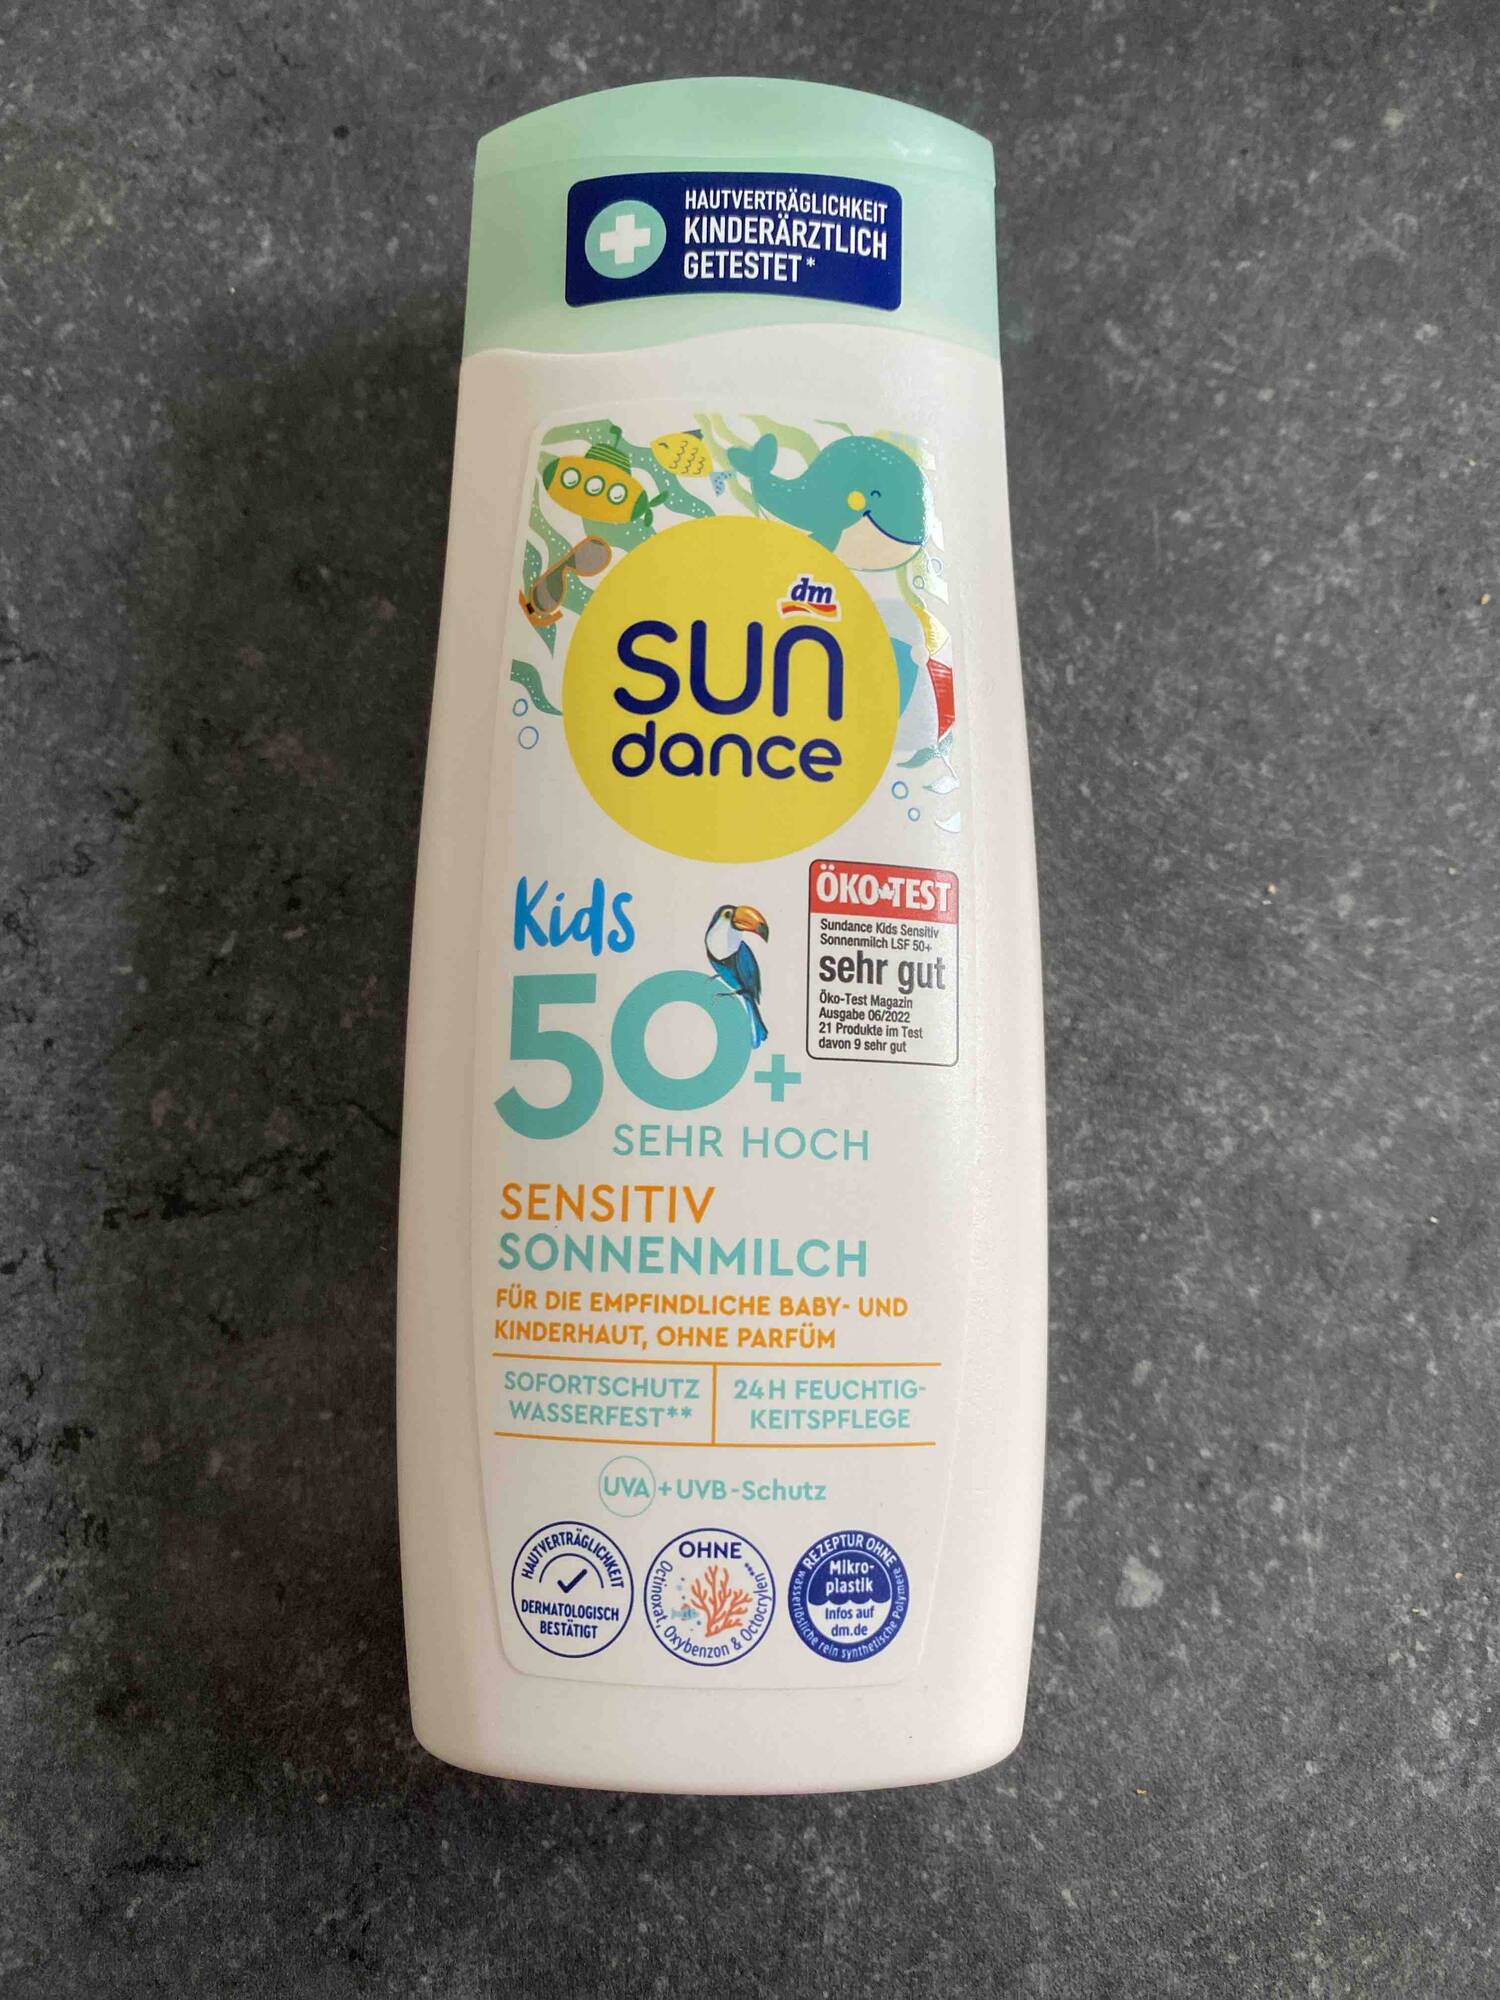 SUNDANCE - Kids sonnenmilch sensitiv 50+